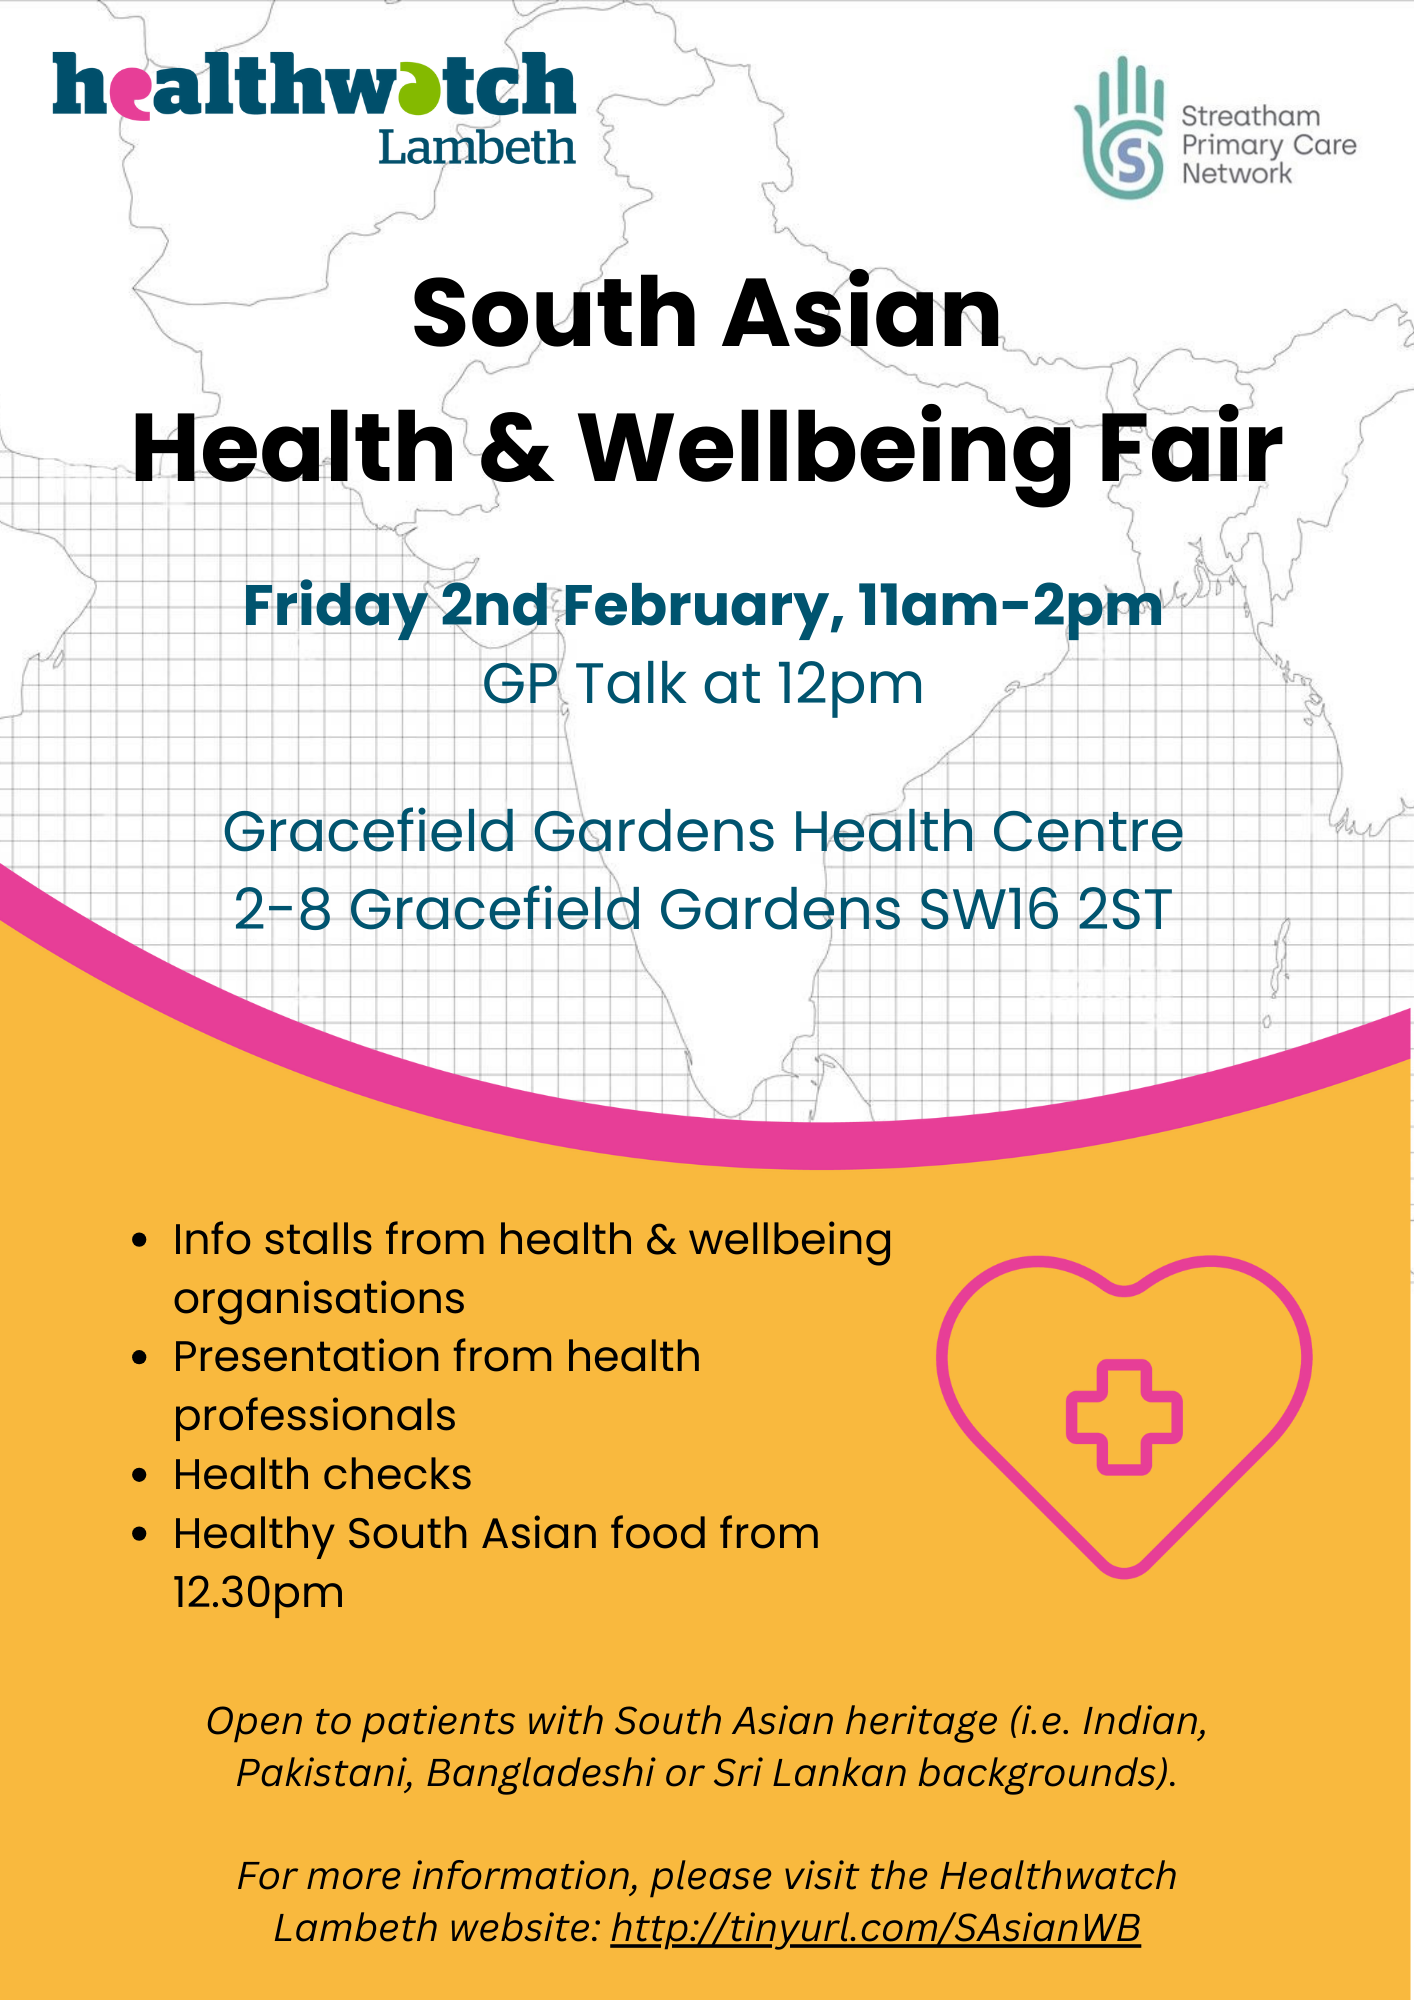 Flyer describing South Asian Health & Wellbeing Fair.